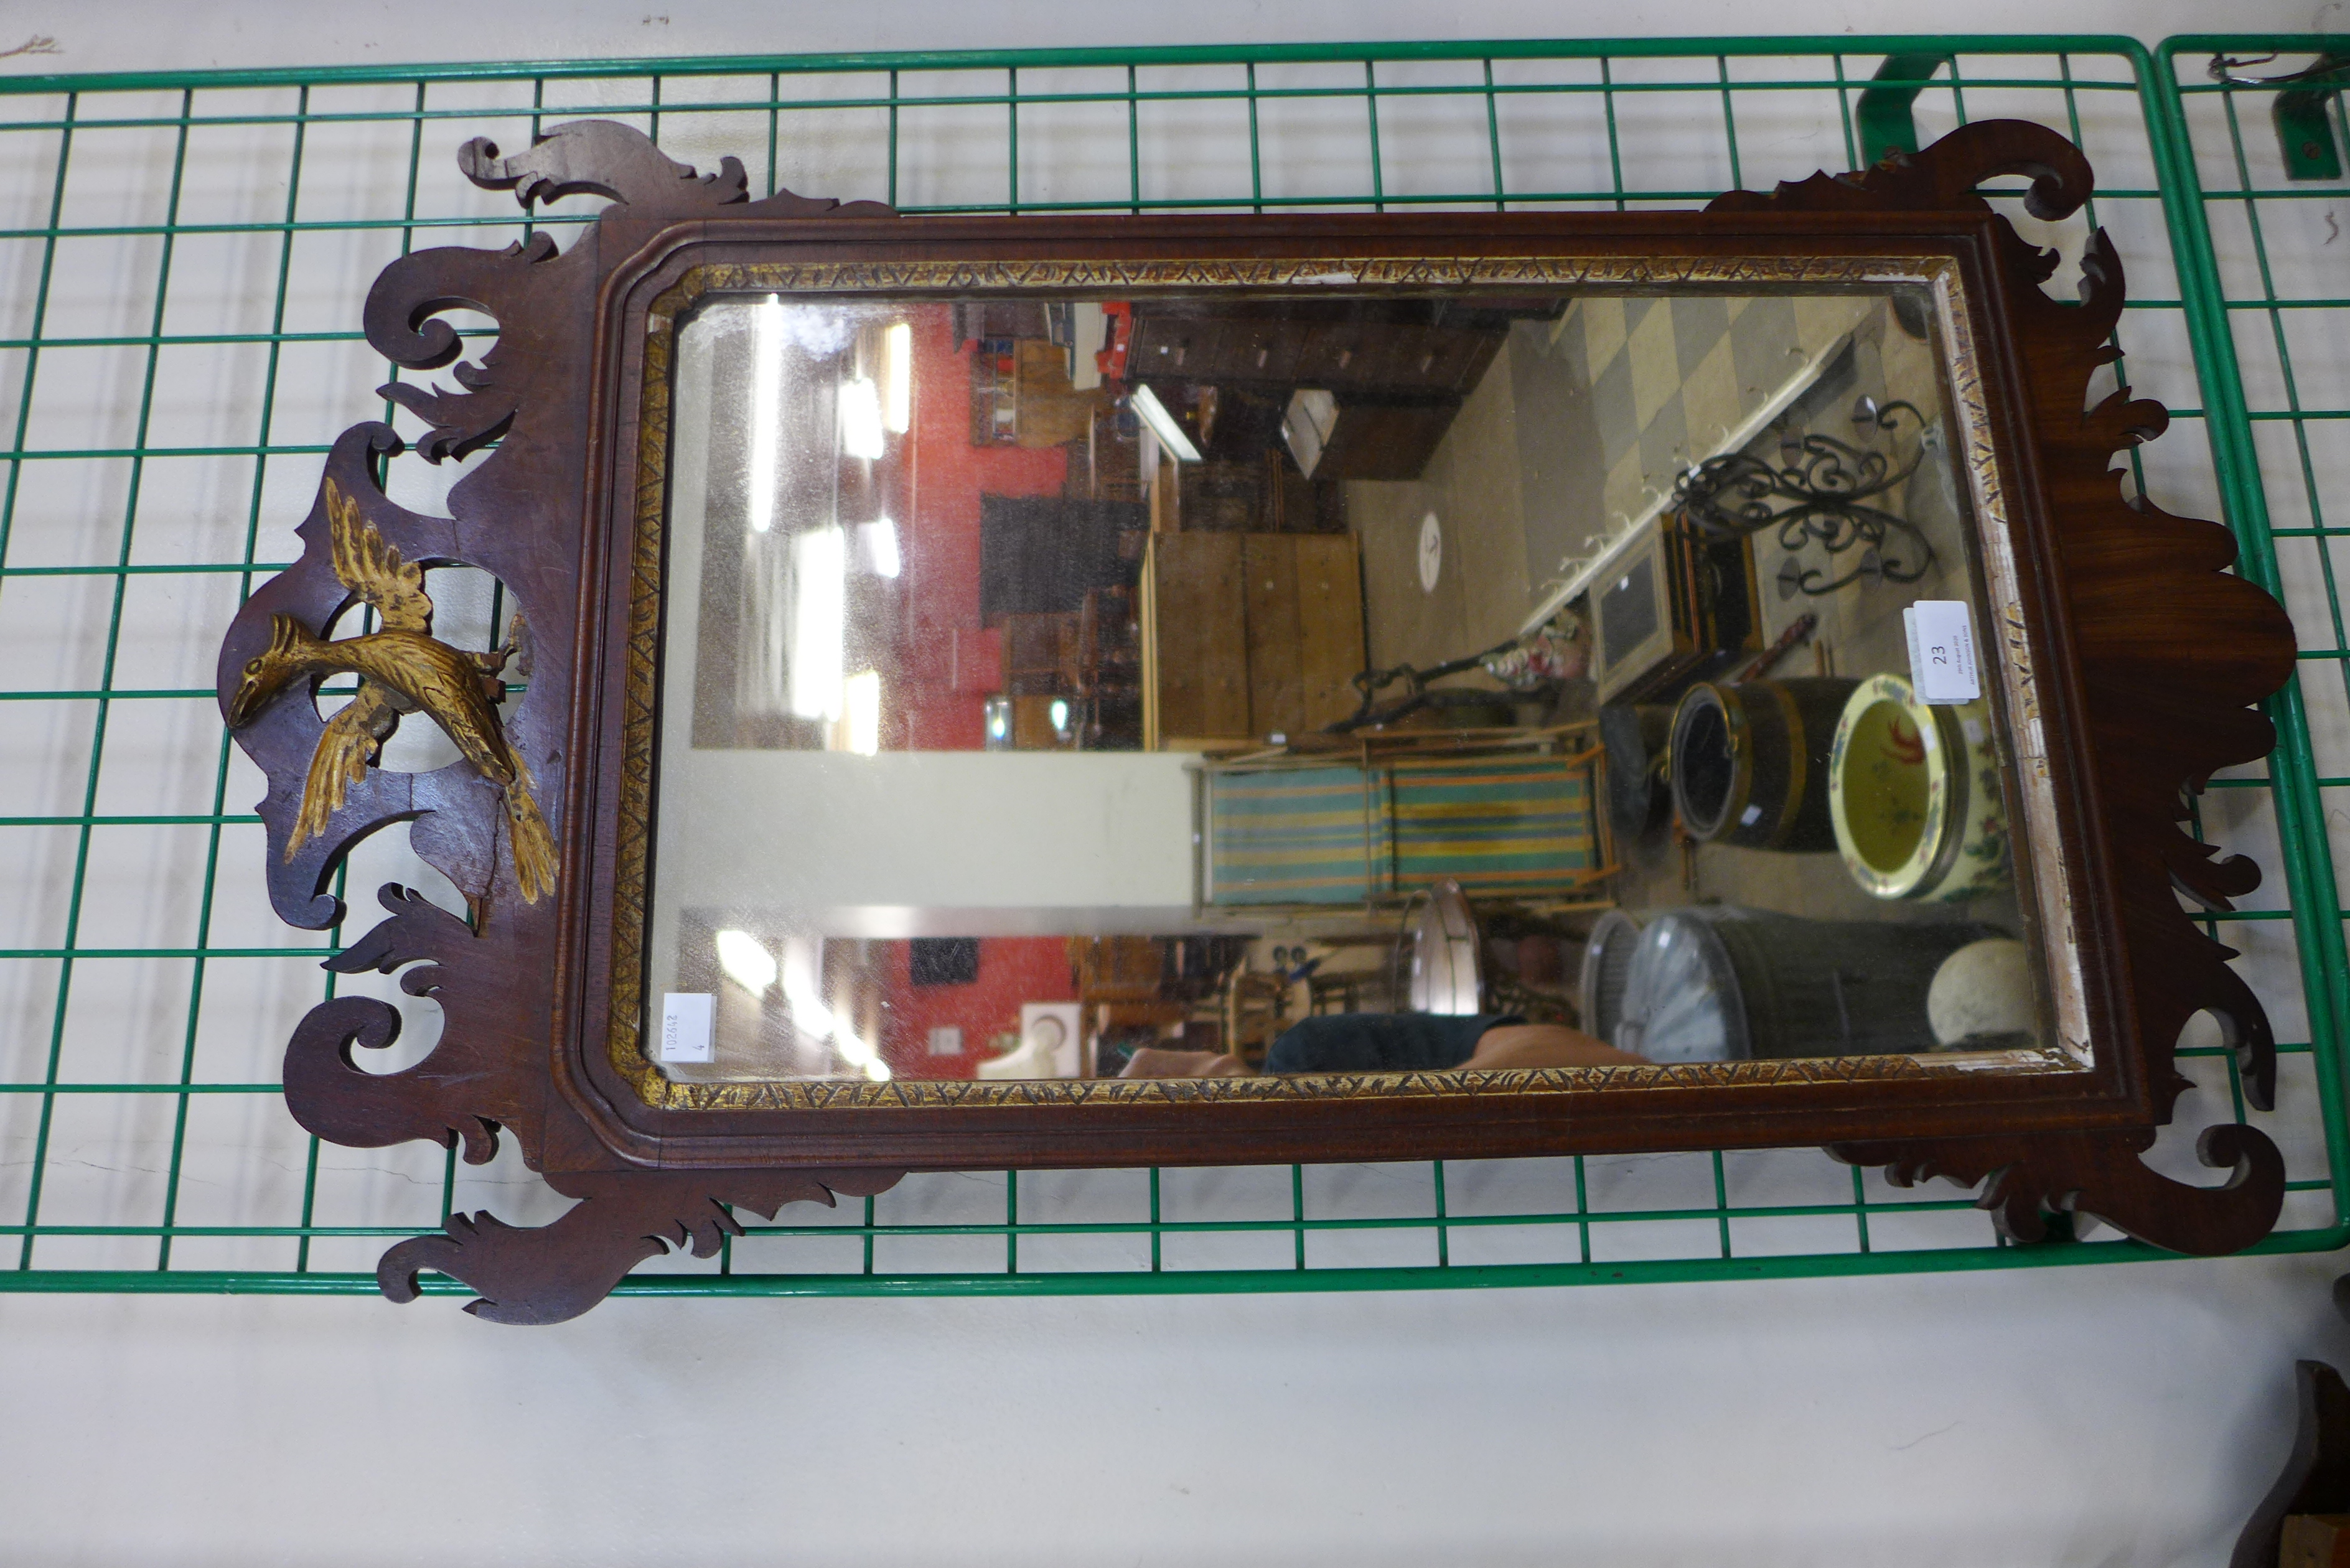 A George II mahogany and parcel gilt framed mirror